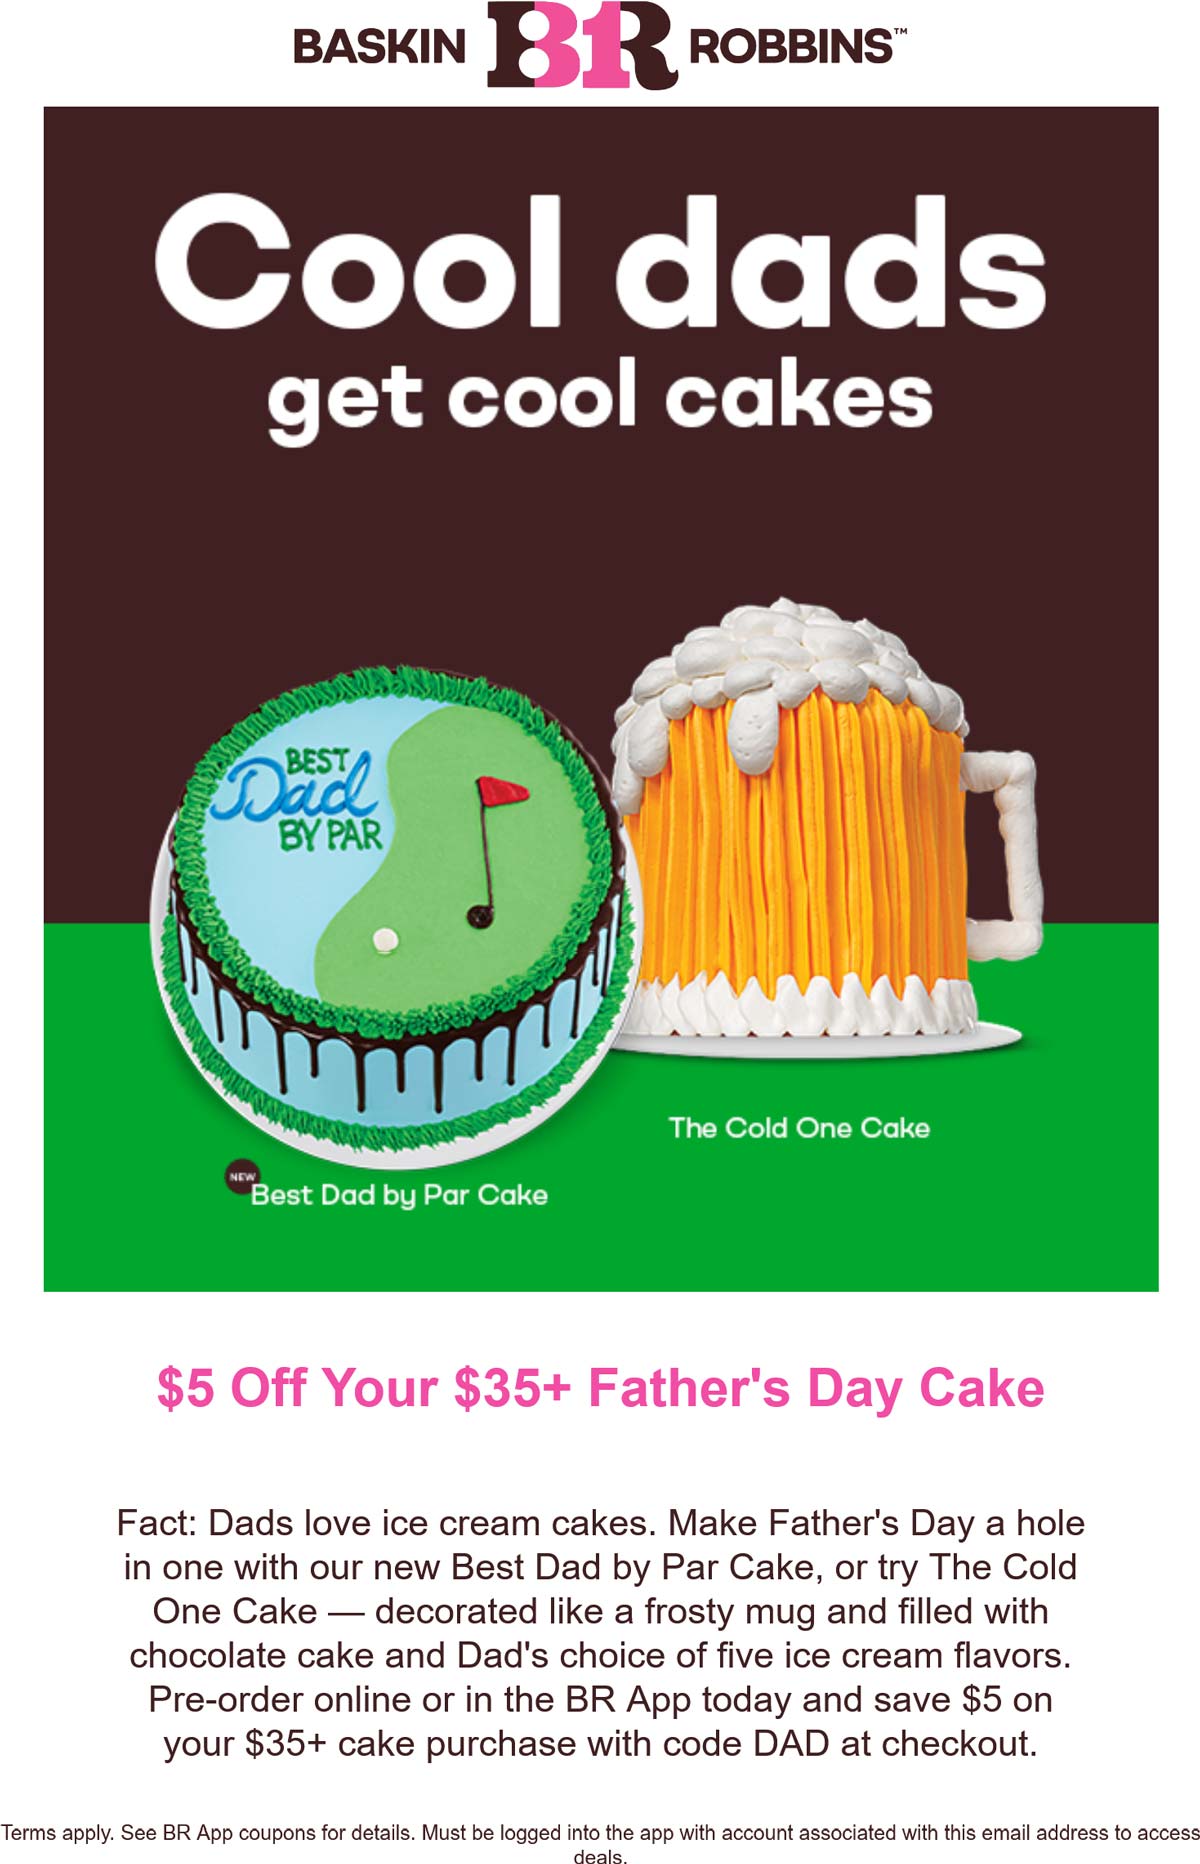 Baskin Robbins restaurants Coupon  $5 off $35 on fathers day ice cream cake at Baskin Robbins via promo DAD #baskinrobbins 